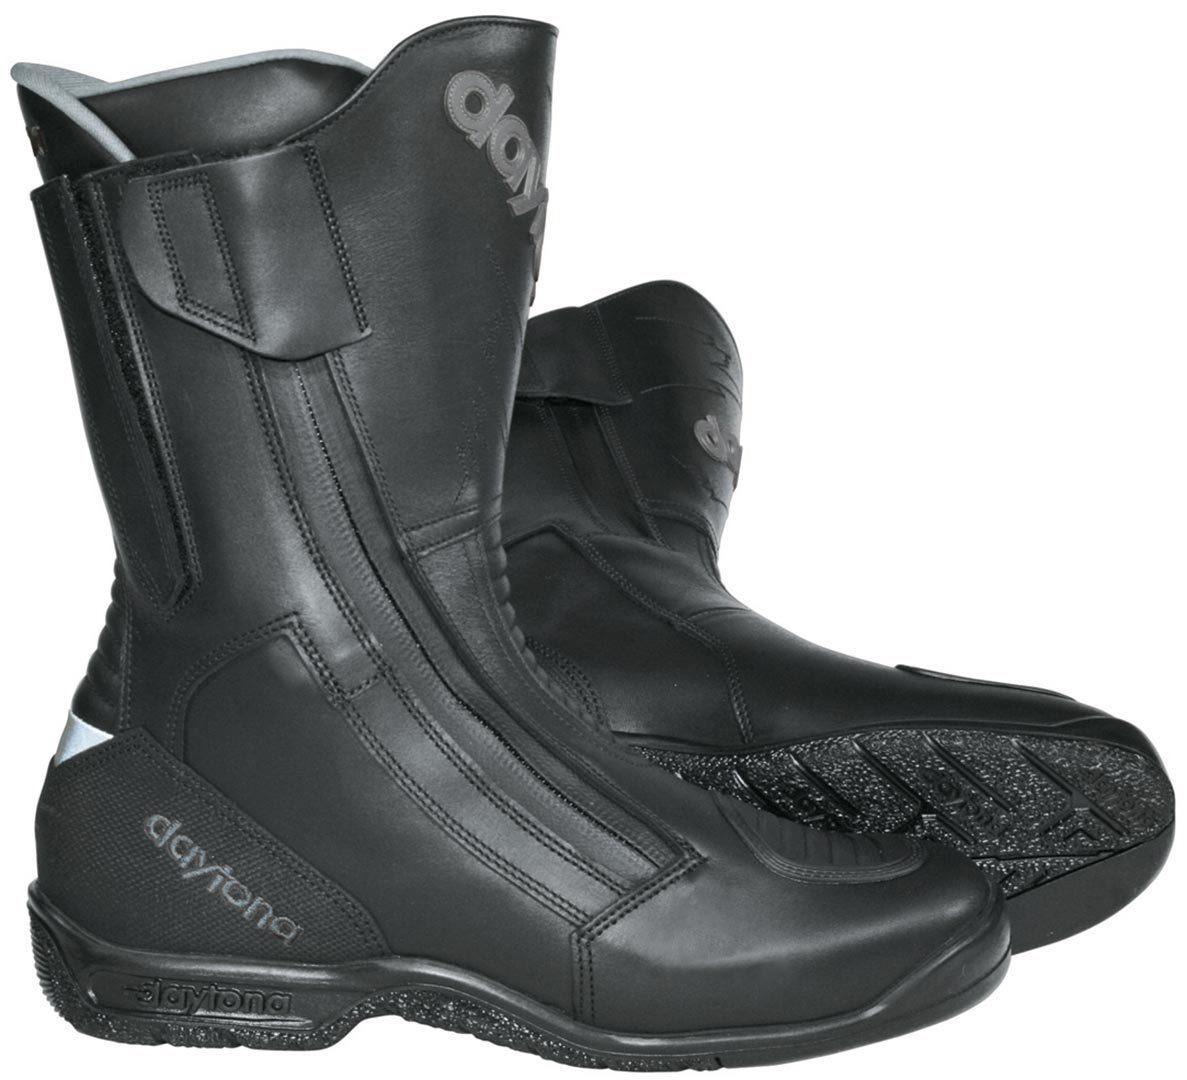 Daytona Road Star Touring Motorcycle Boots, black, Size 36, black, Size 36